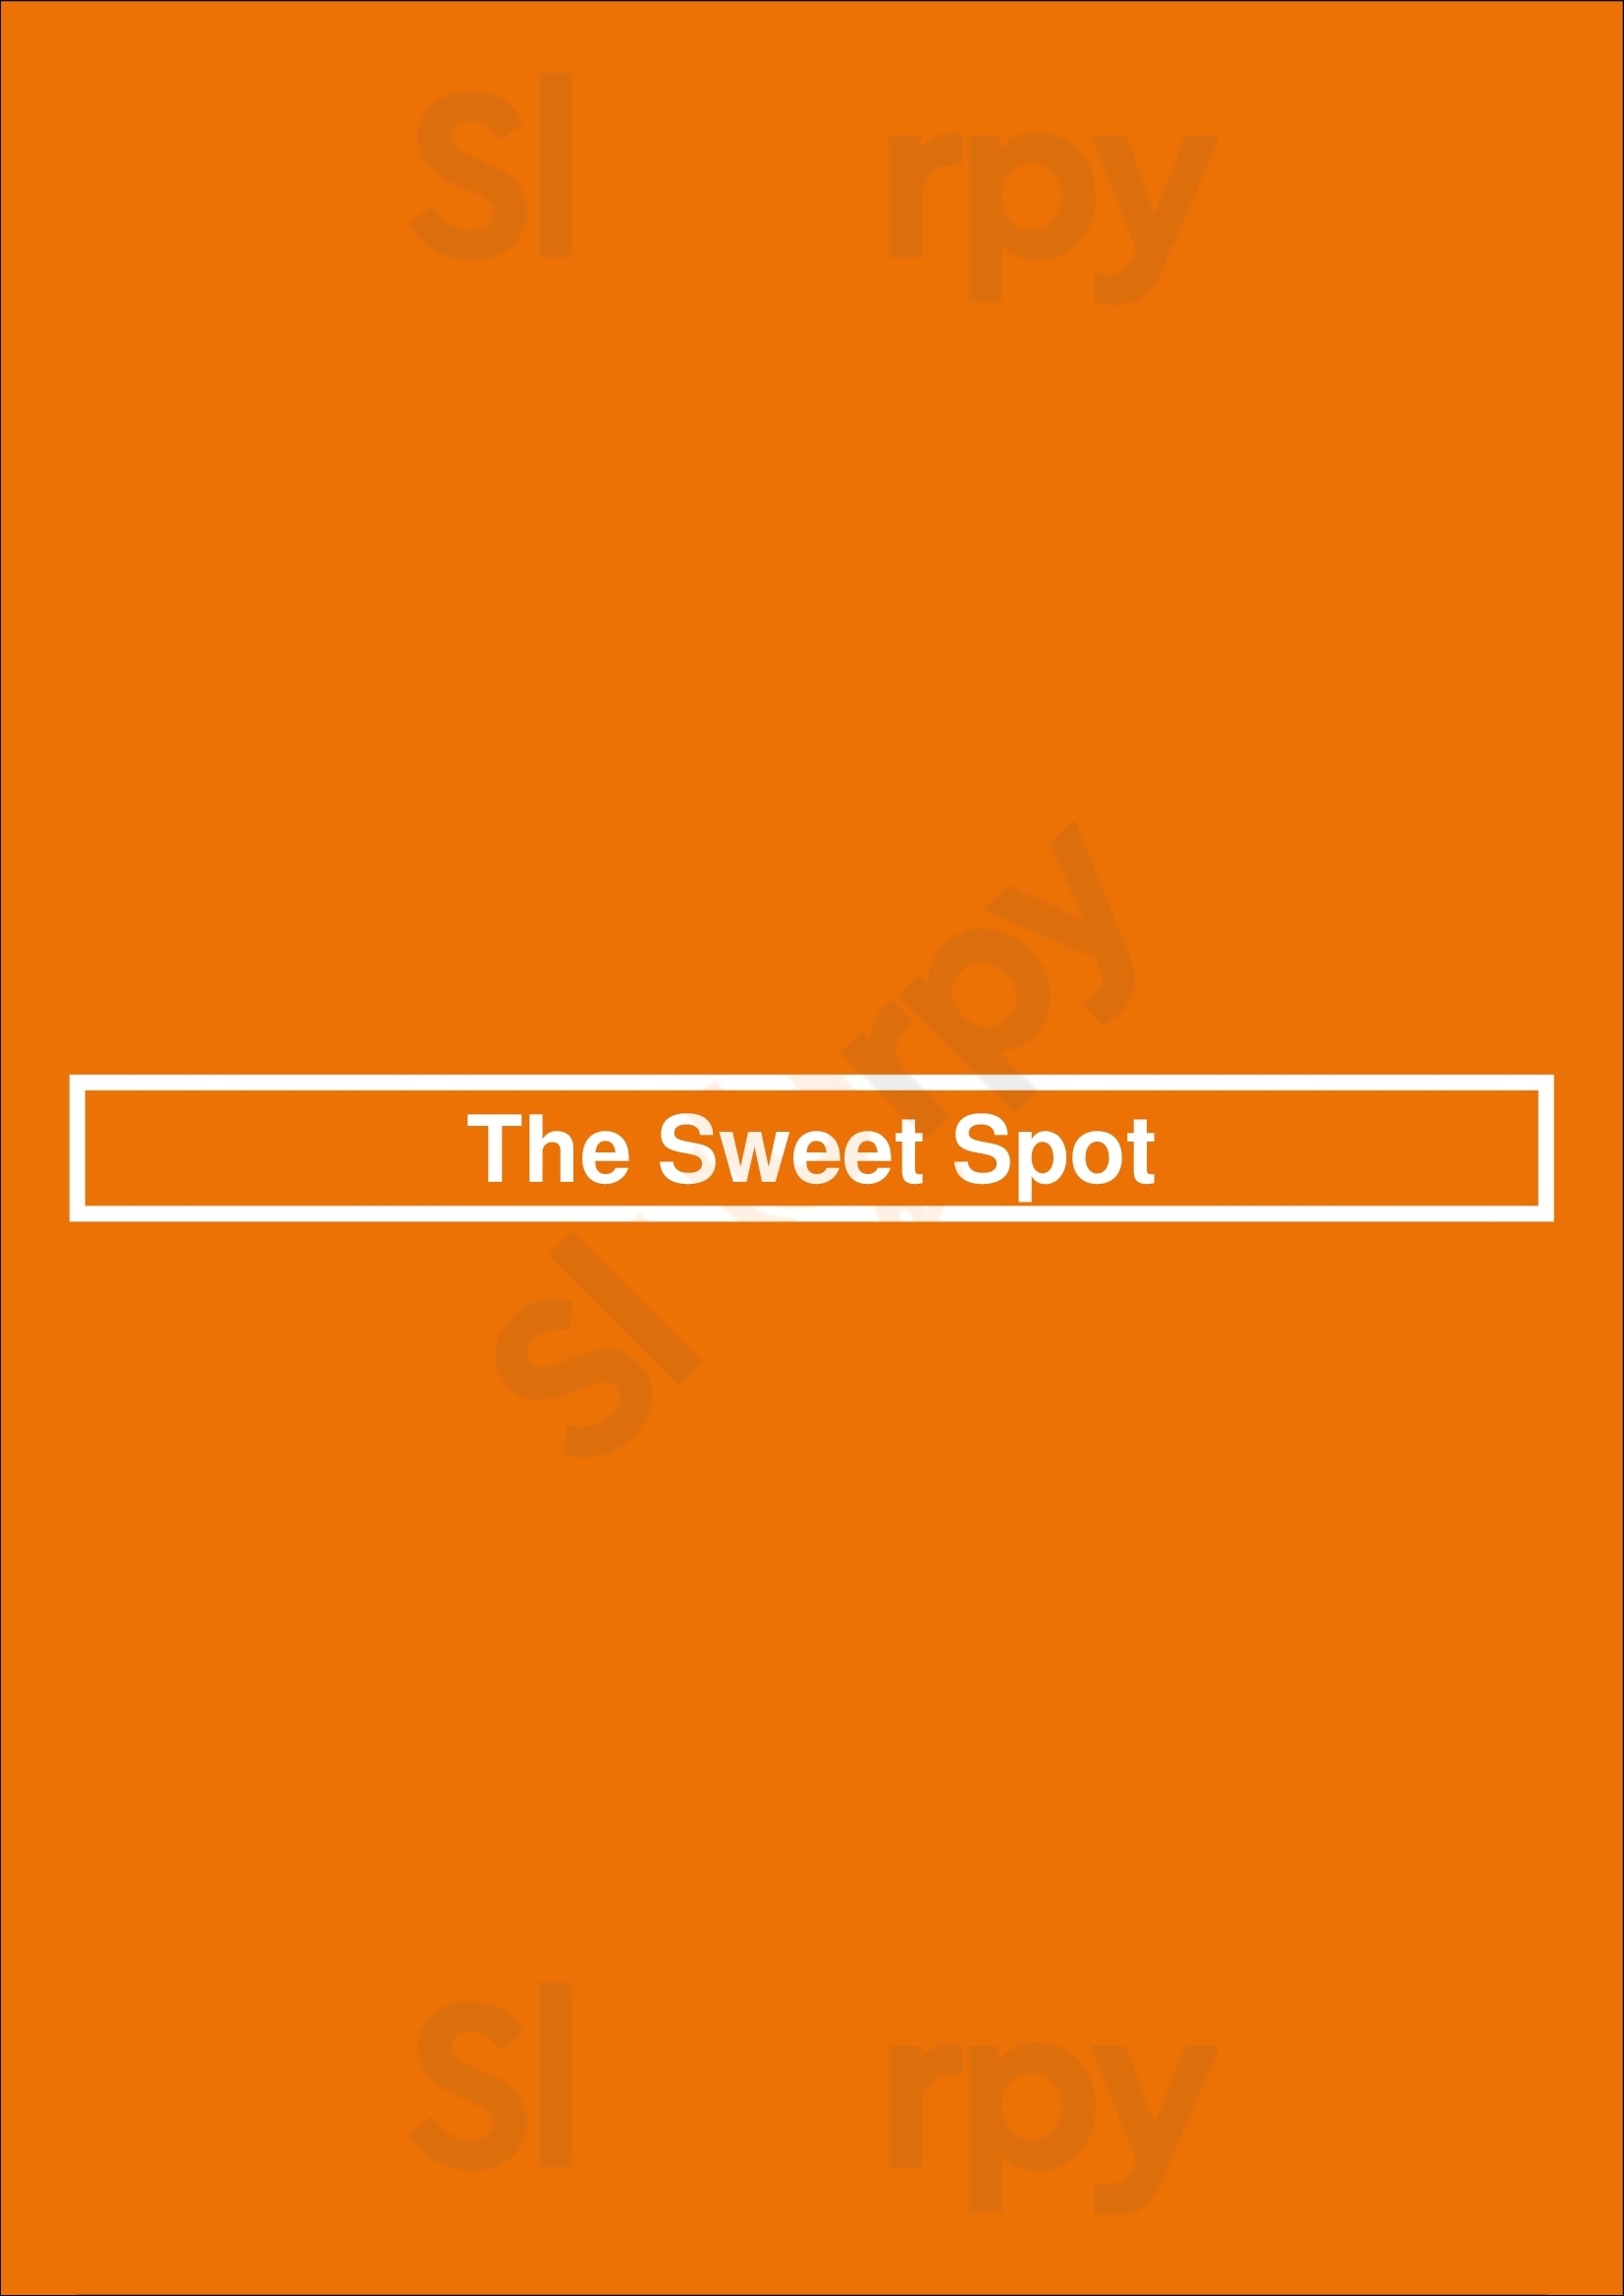 The Sweet Spot Wichita Menu - 1